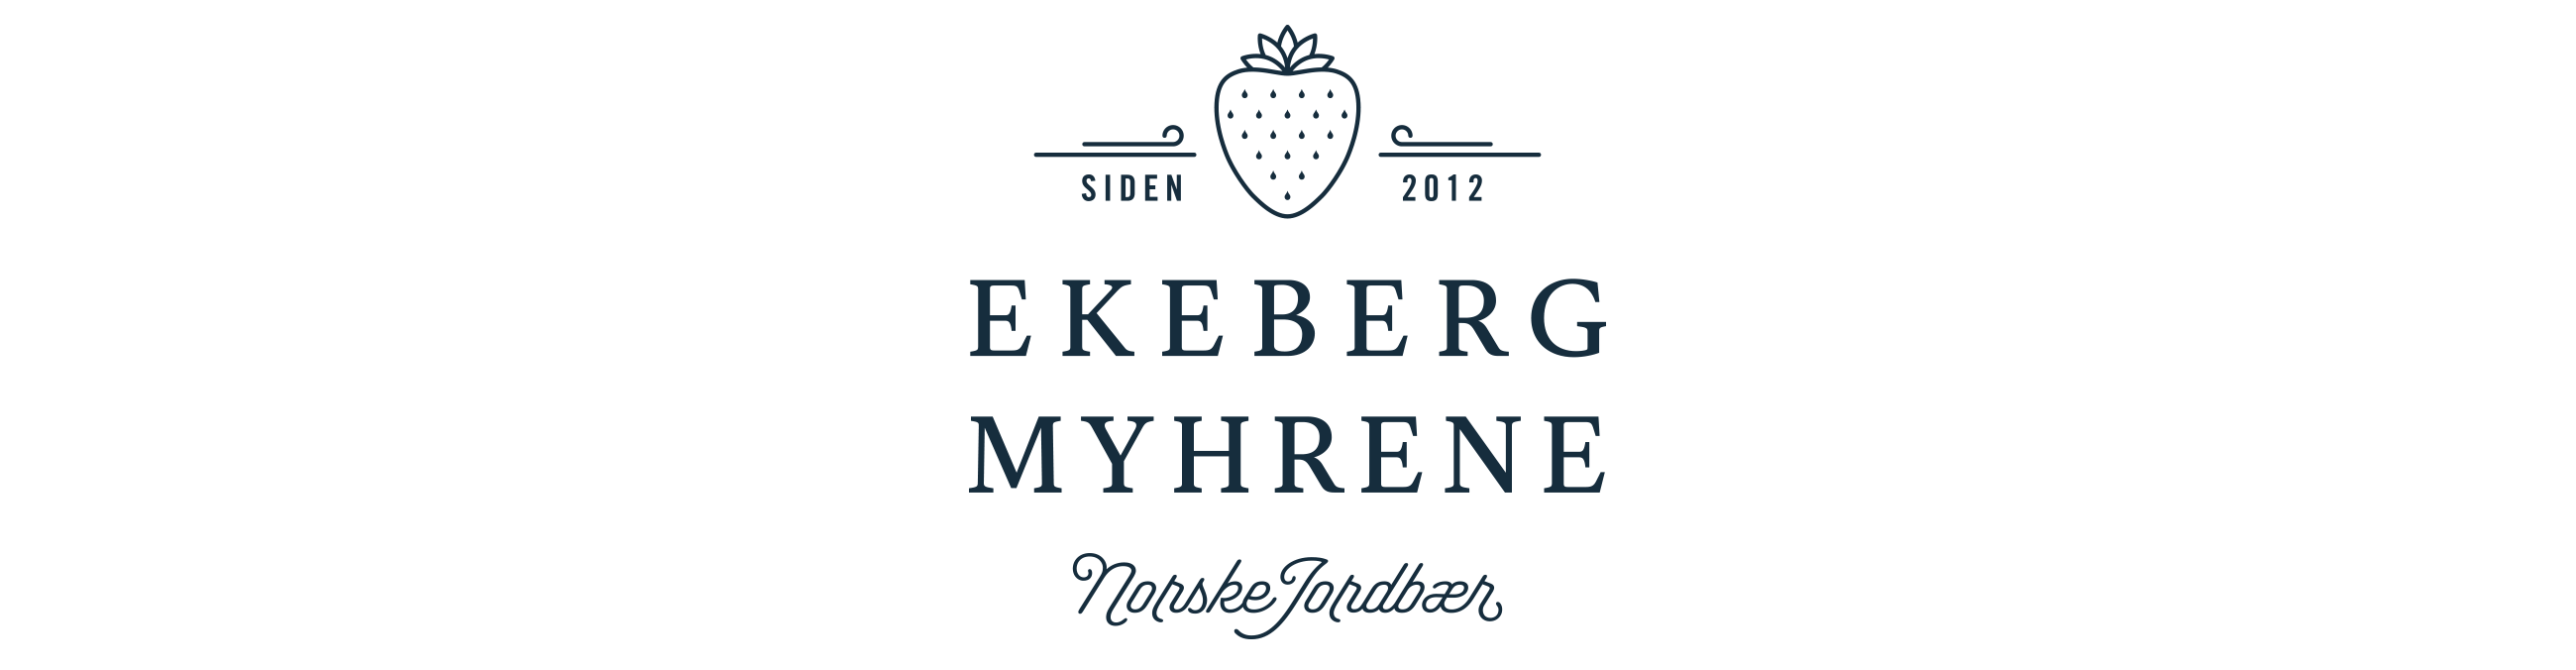 Ekeberg Myhrene logo norske jordbær strawberries. Visuell identitet Visual identity.